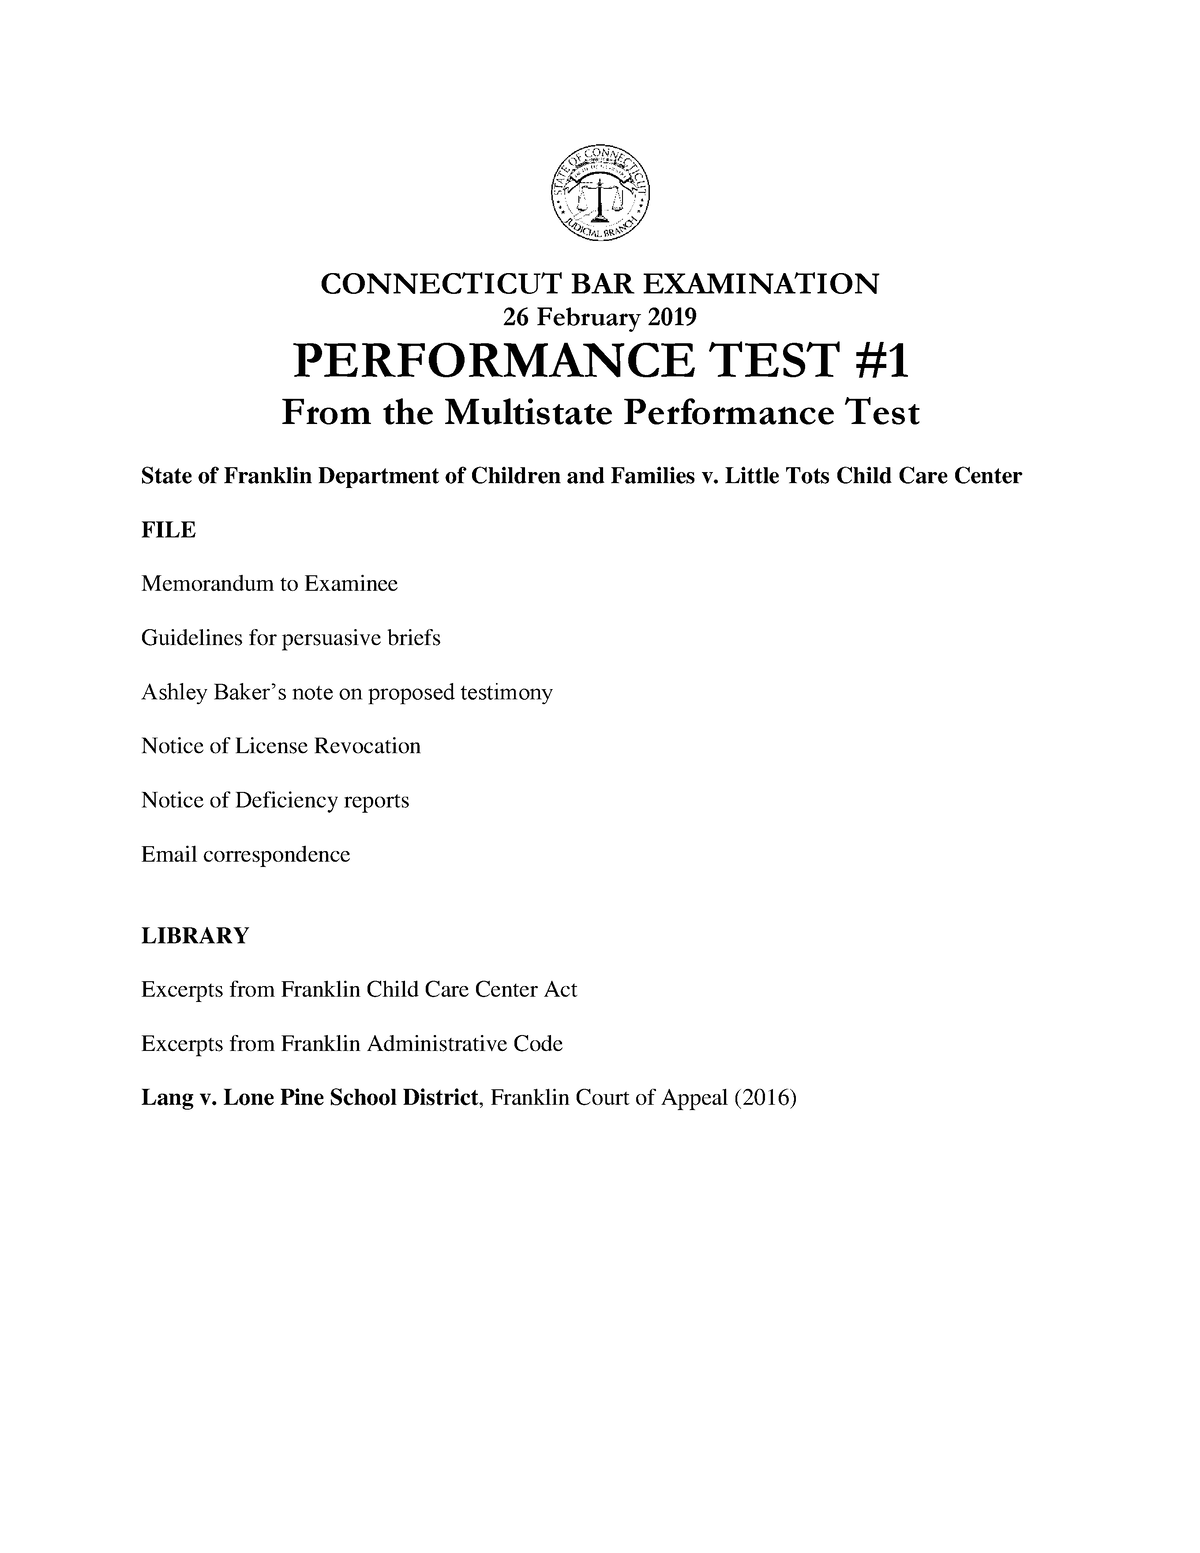 Connecticut Bar Exam Performance Test Little Tots Child Care Center